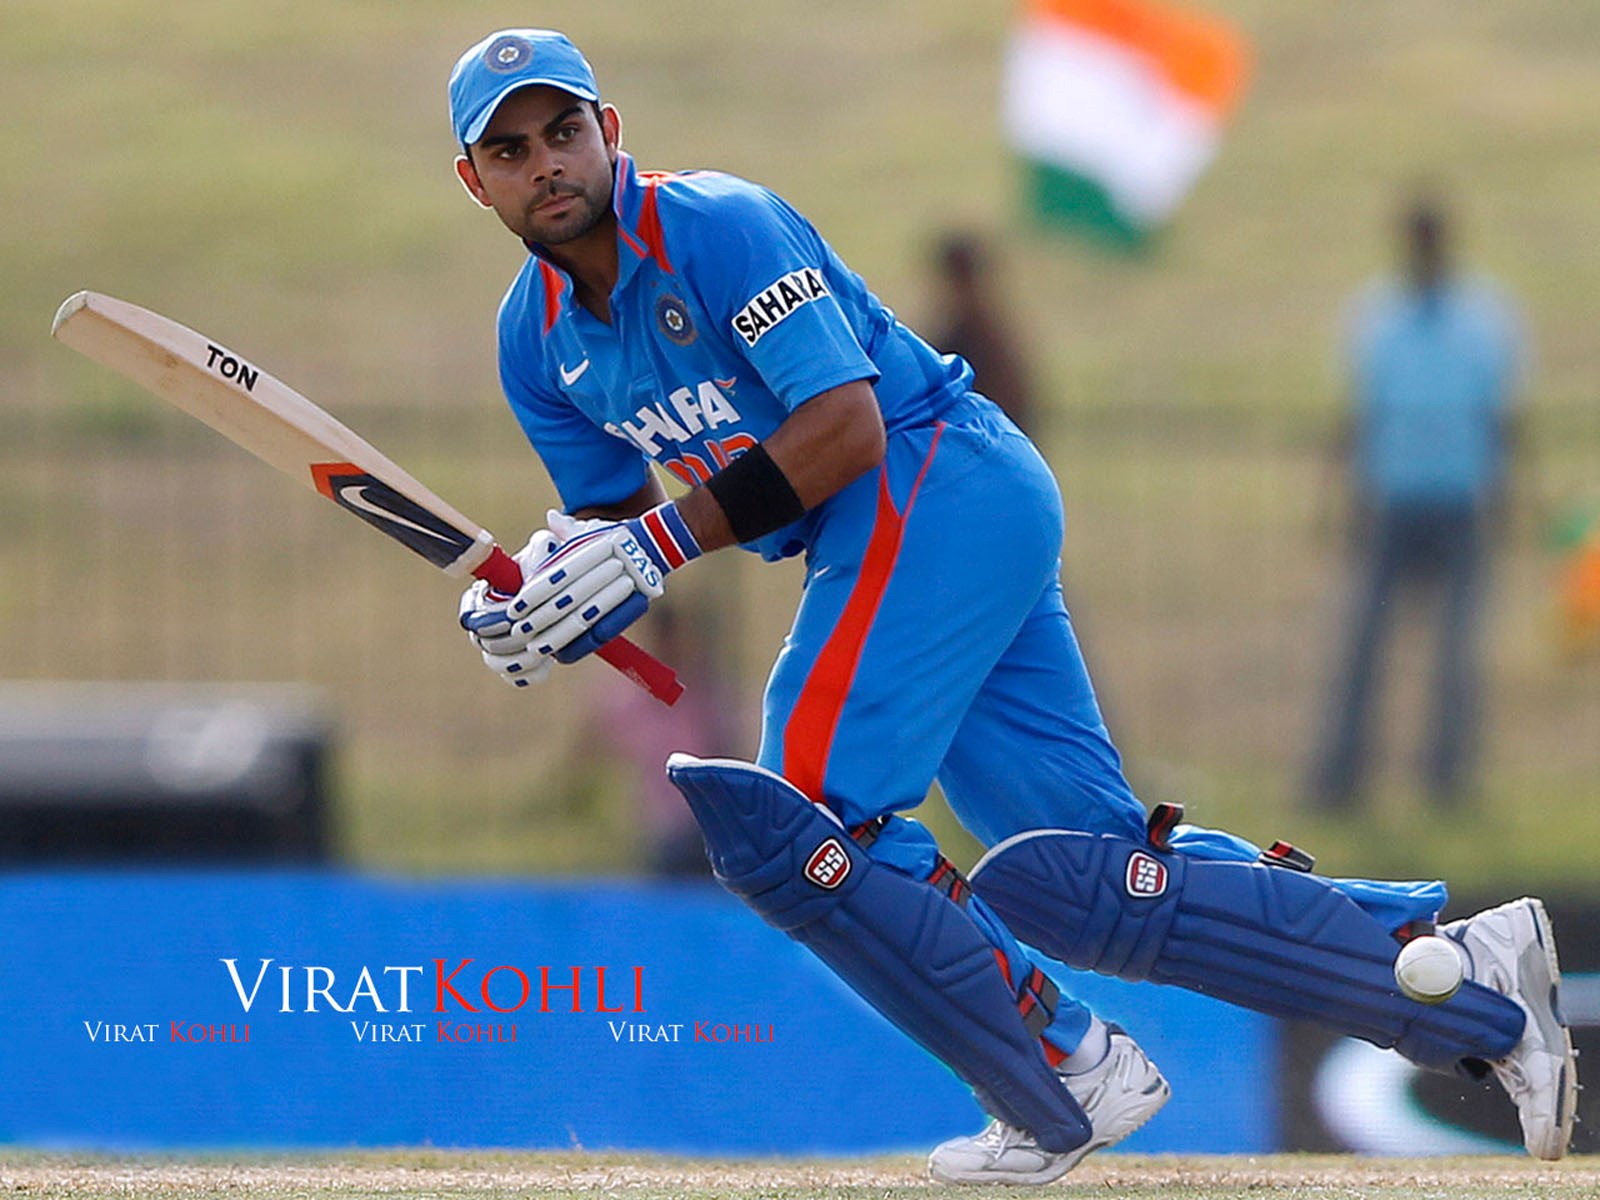 Virat Kohli Play Best Shot in Cricket Match Wallpapers HD Wallpapers 1600x1200